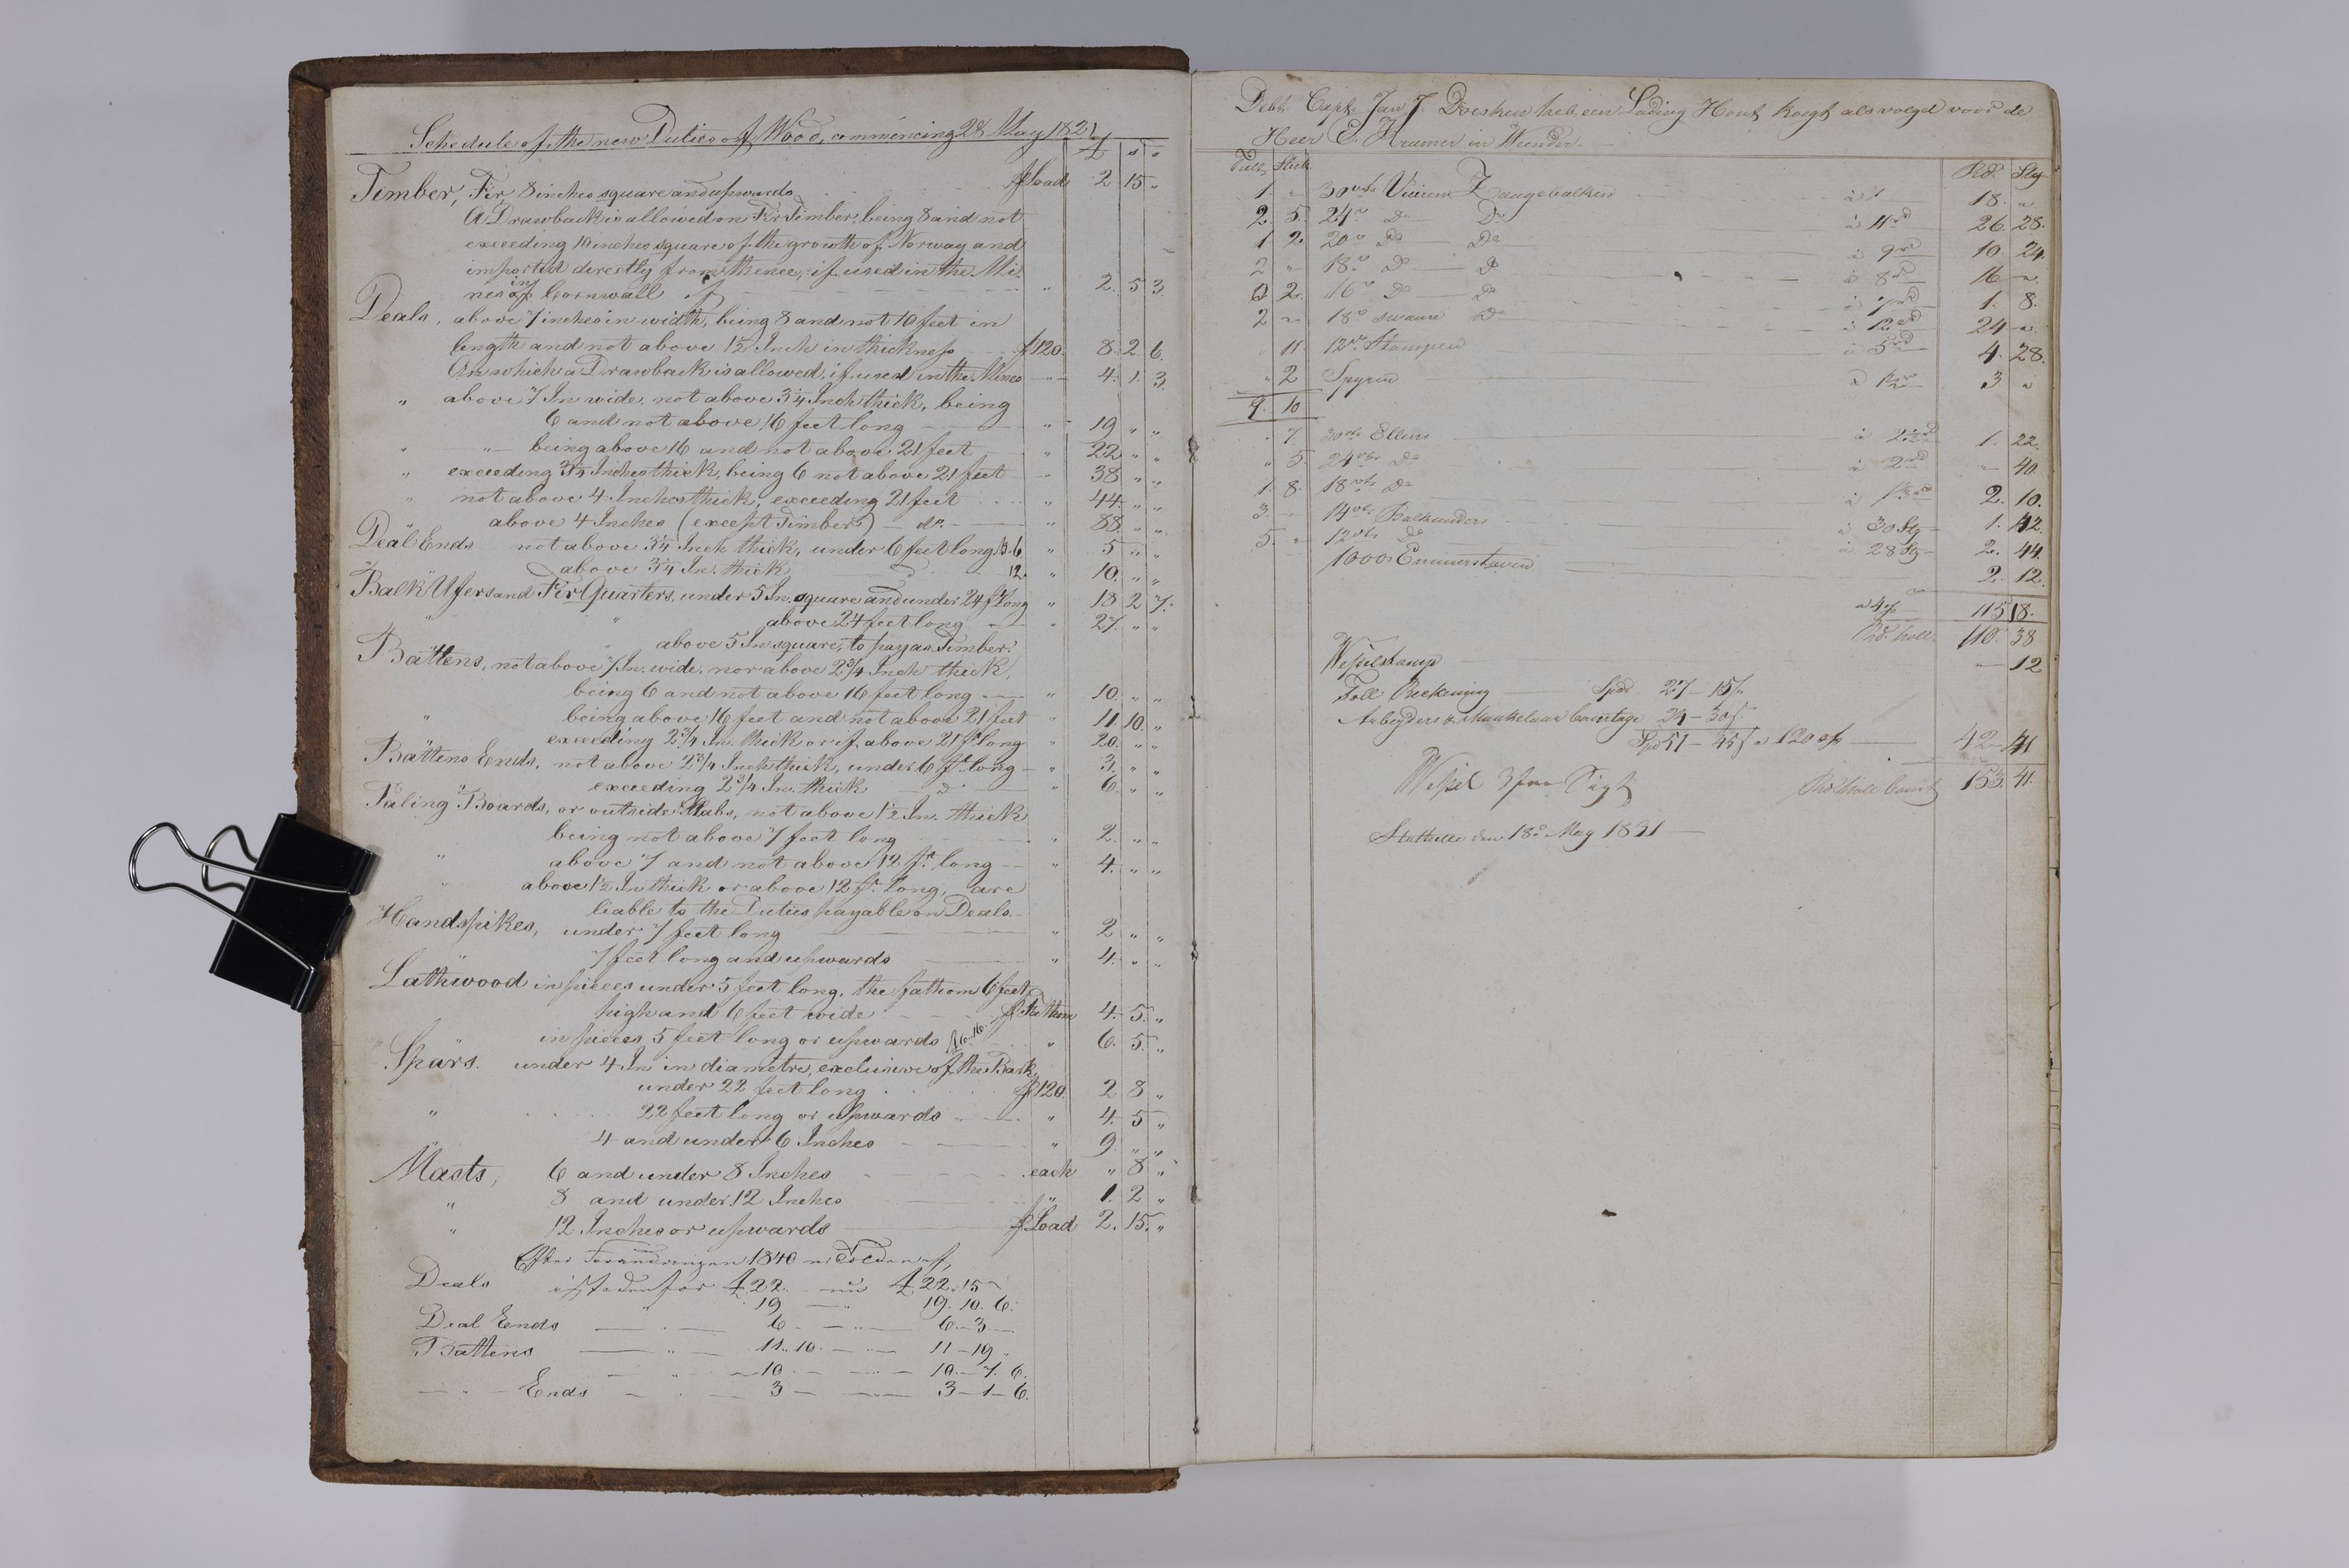 , Priscourant-tømmerpriser, 1834-38, 1834-1838, p. 3